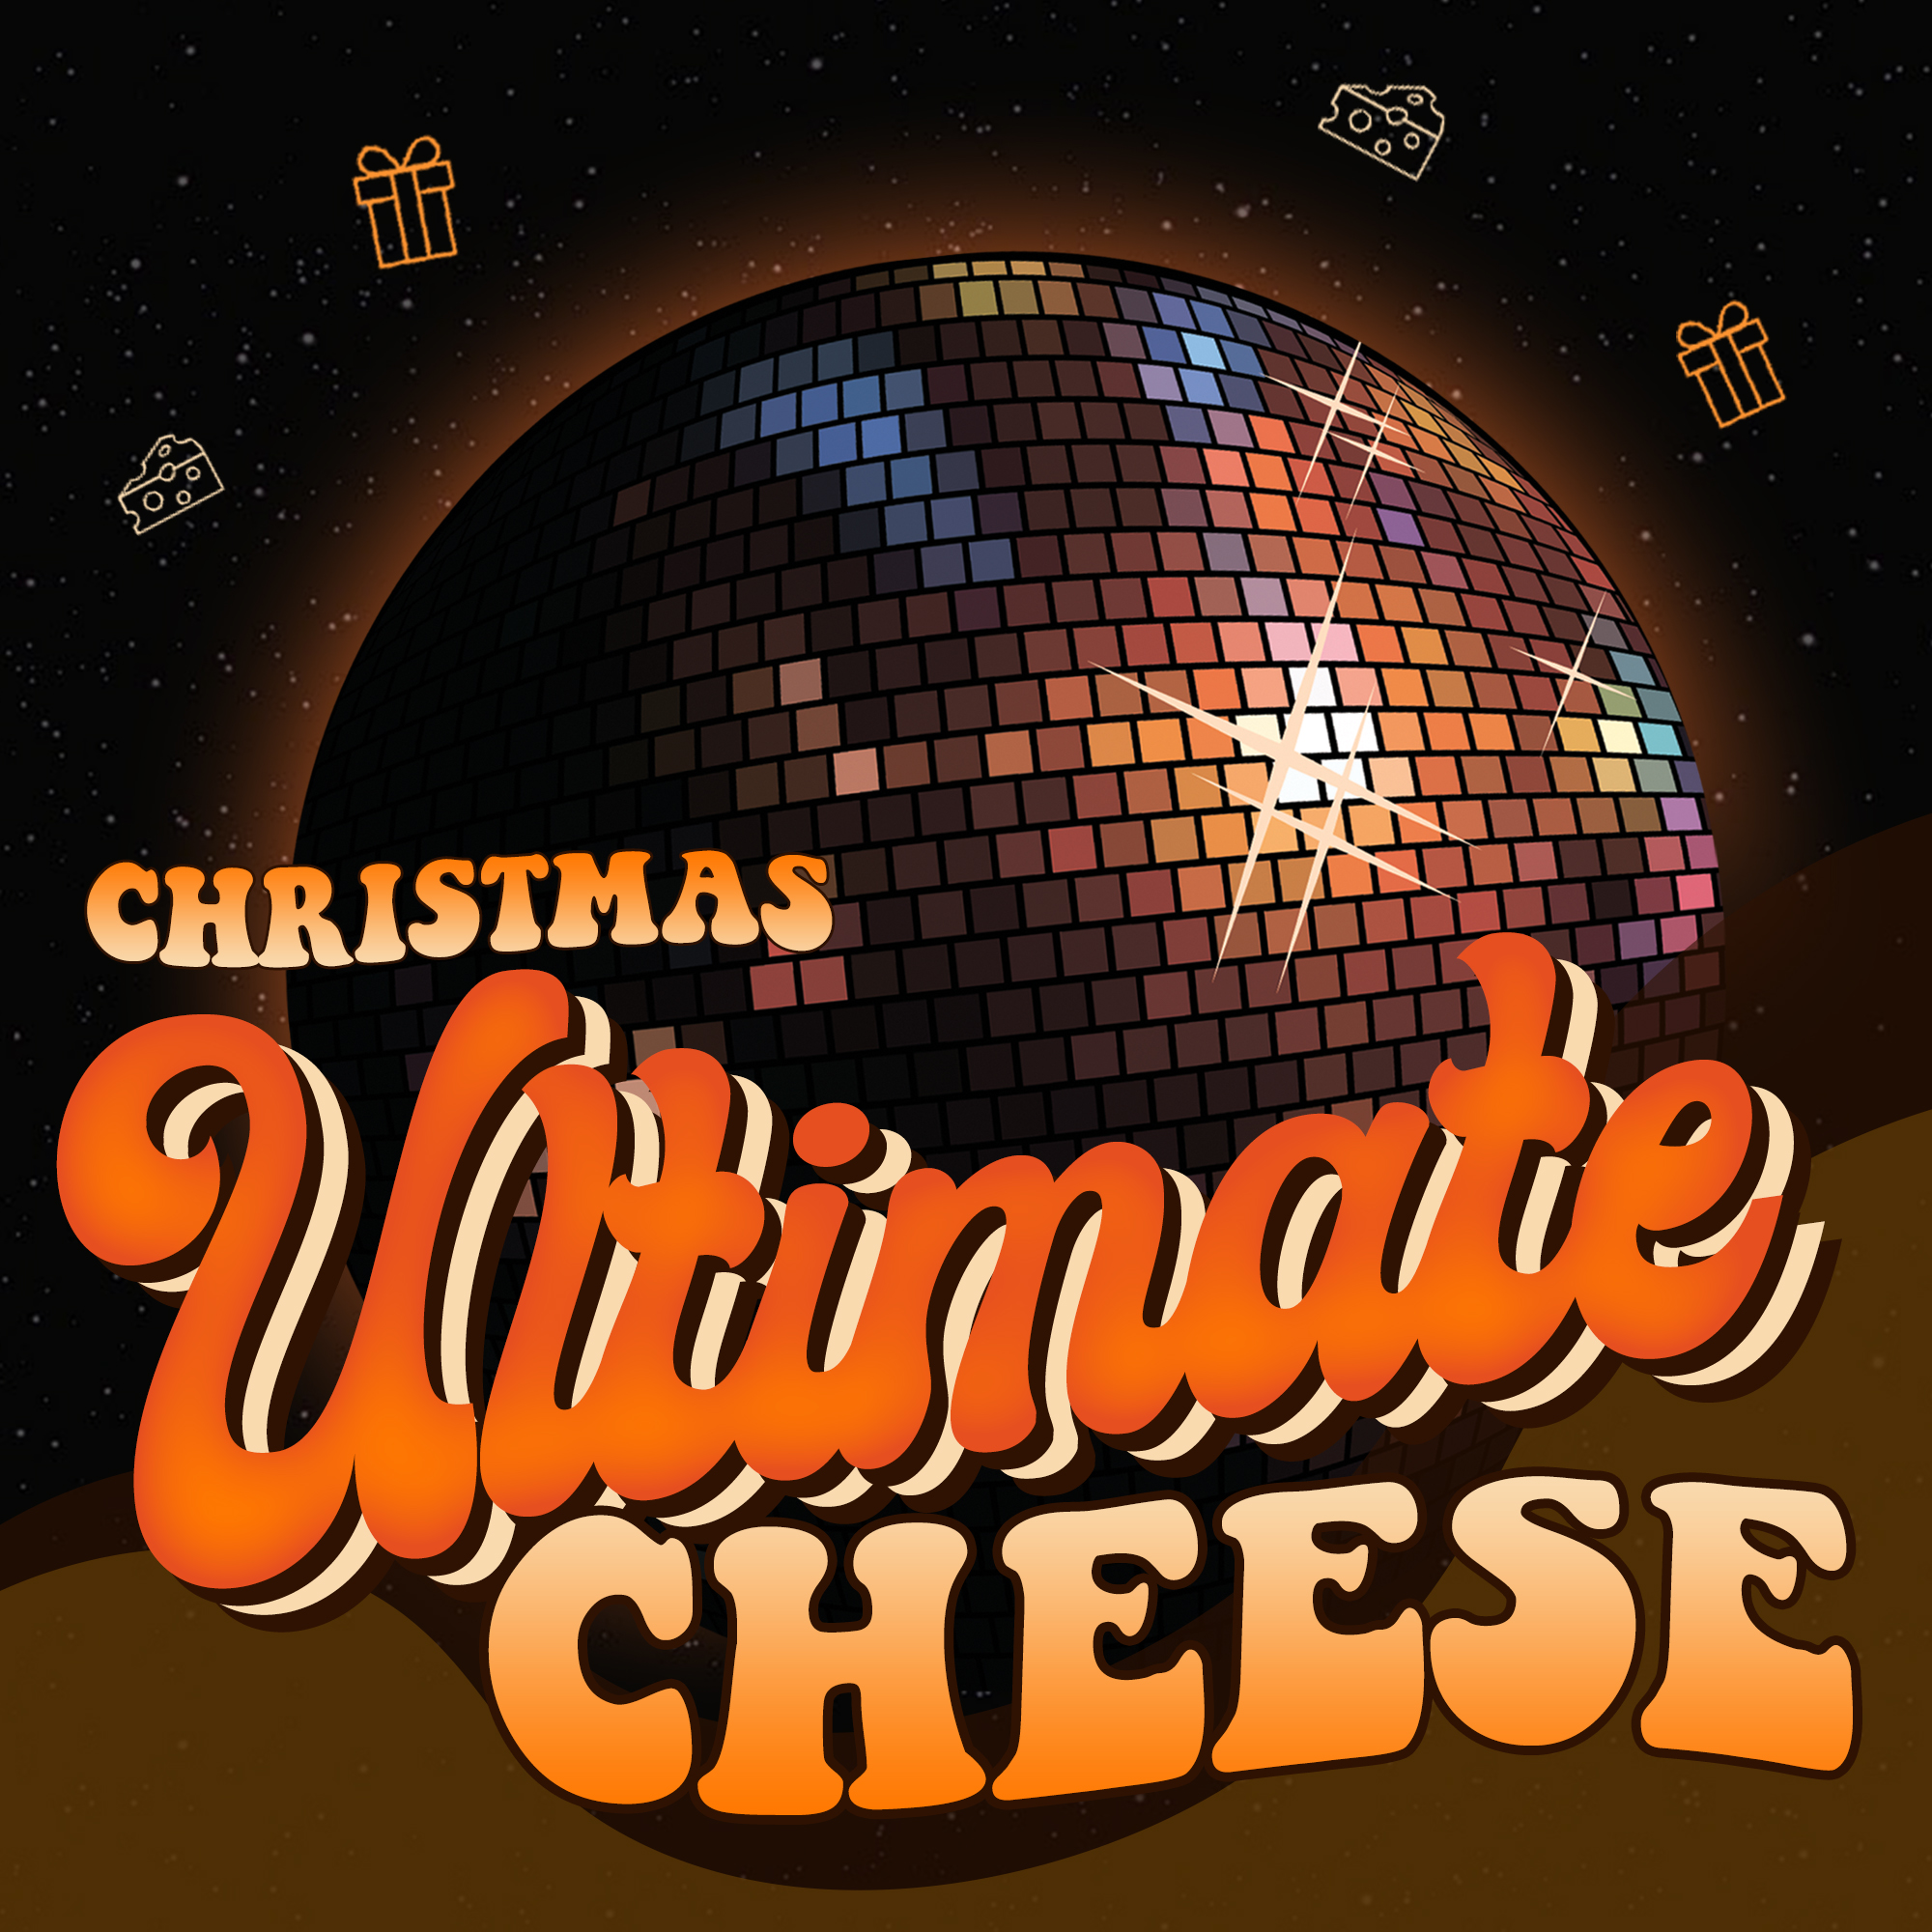 Christmas Ultimate Cheese